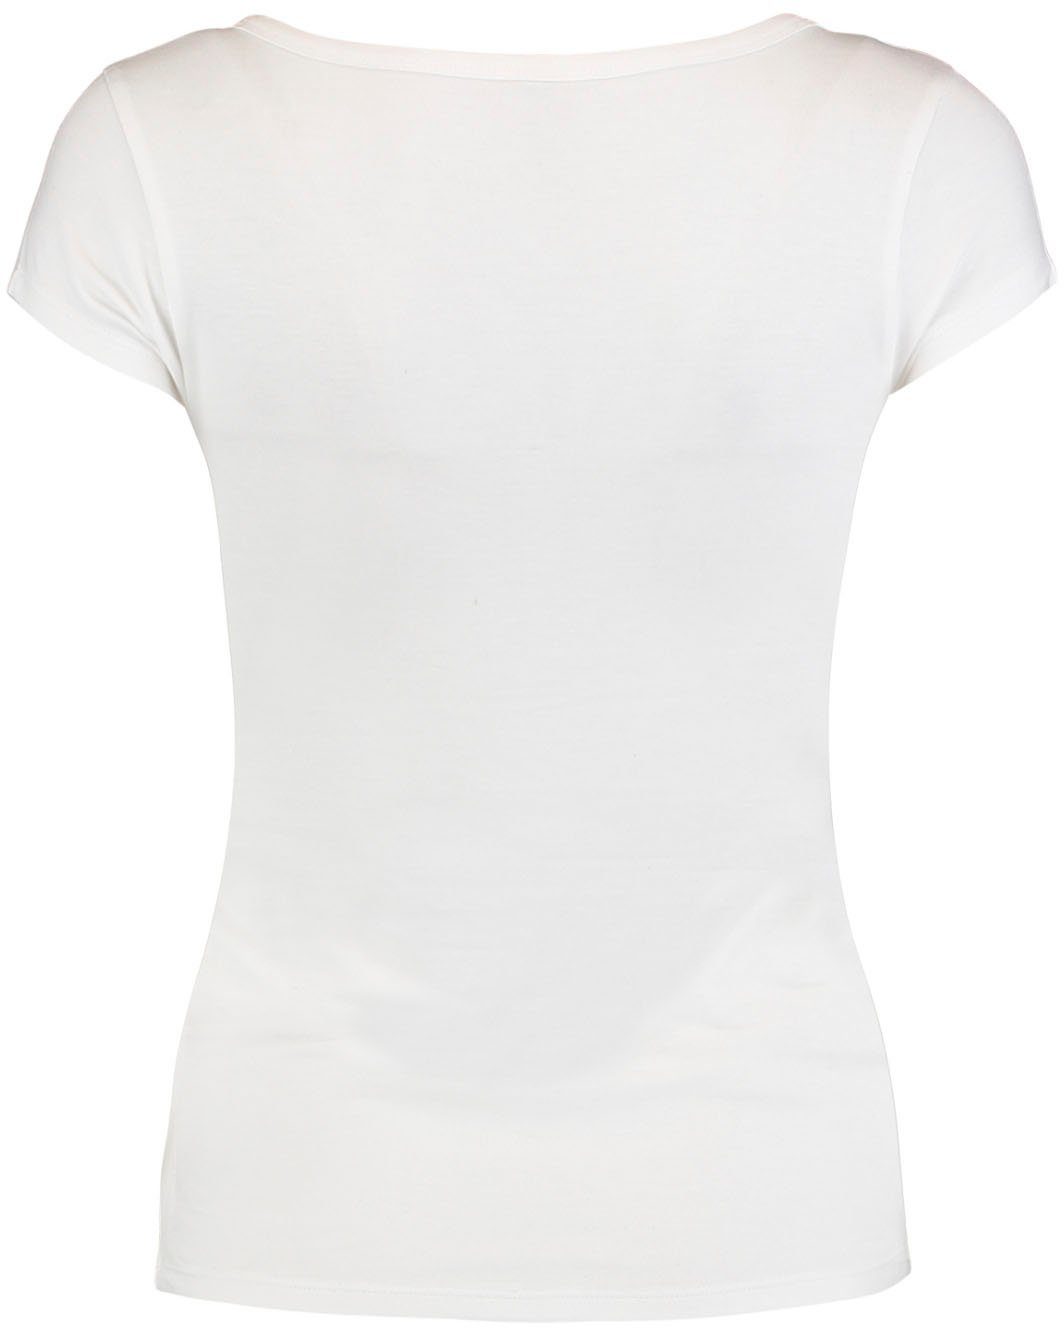 HaILY’S T-Shirt white TP Henna